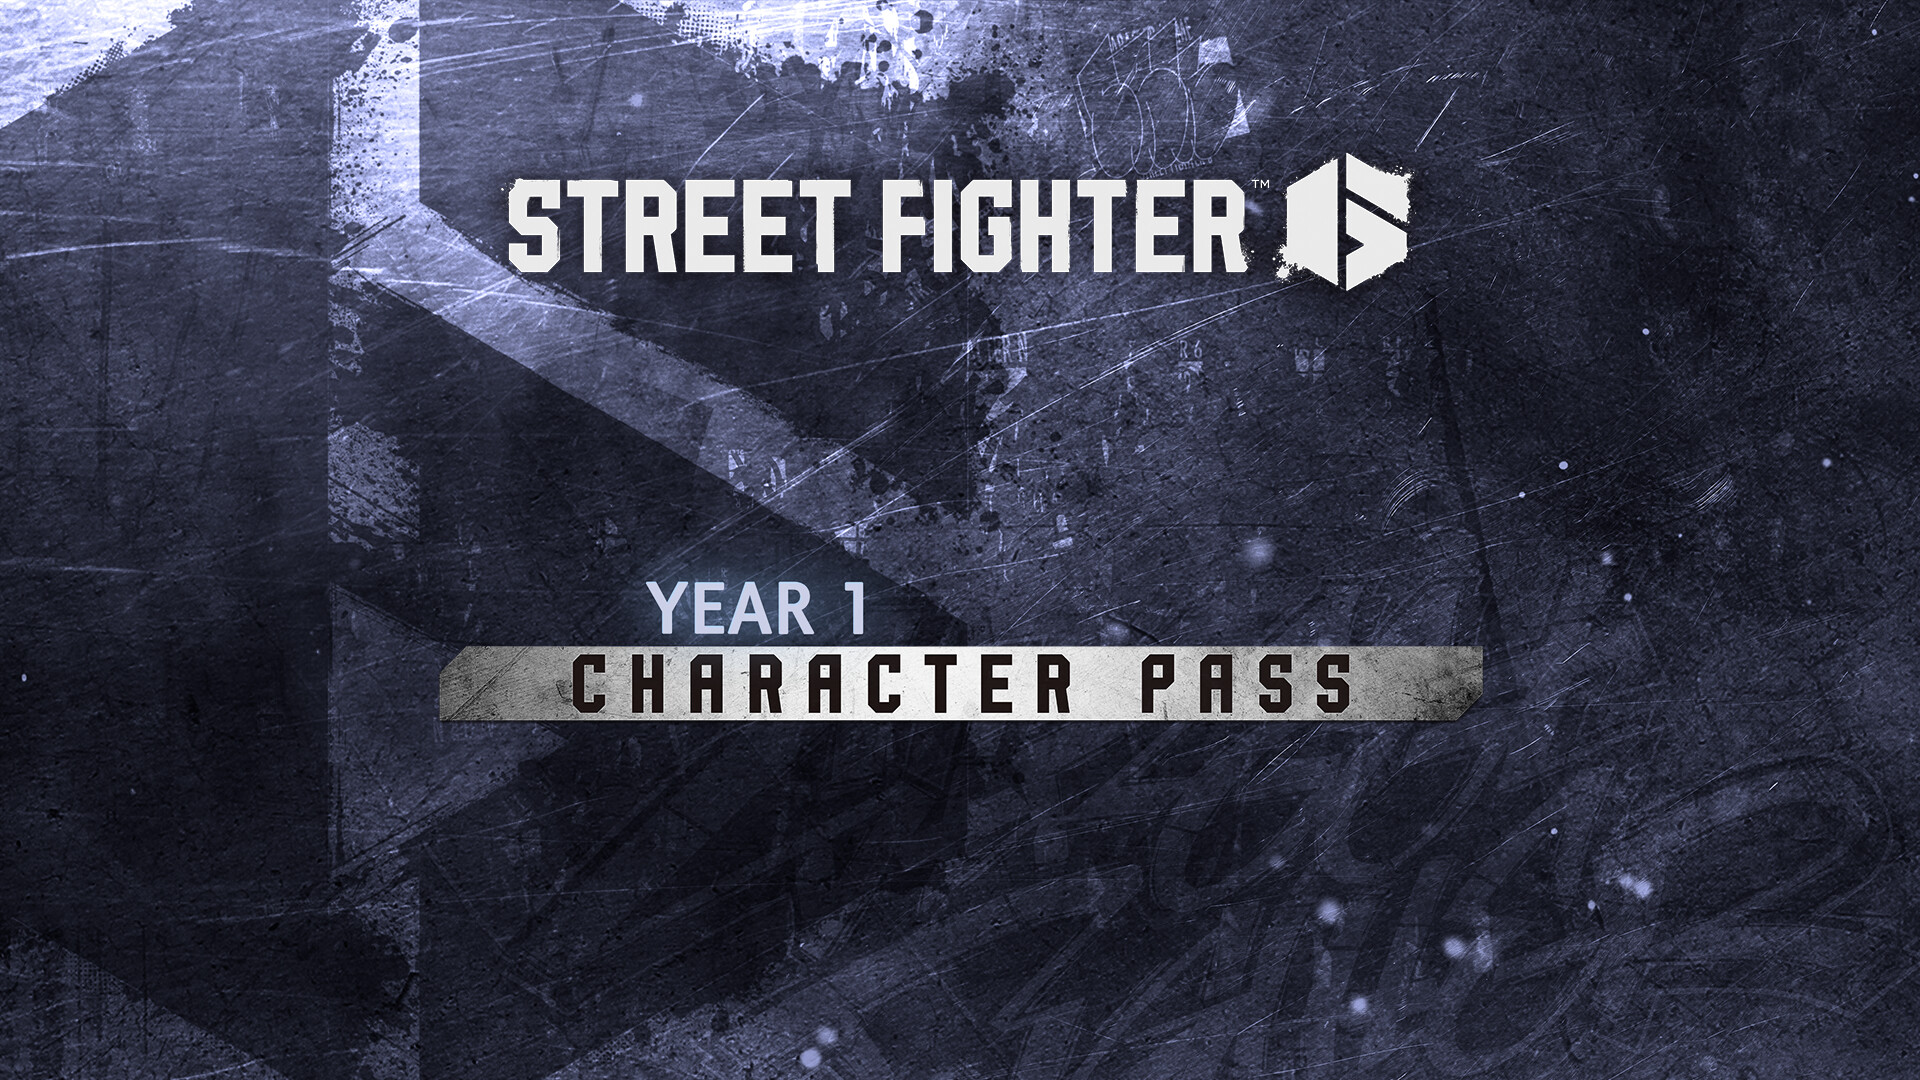 Street Fighter 6: Rashid, Ed, Akuma e AKI são próximos DLCs